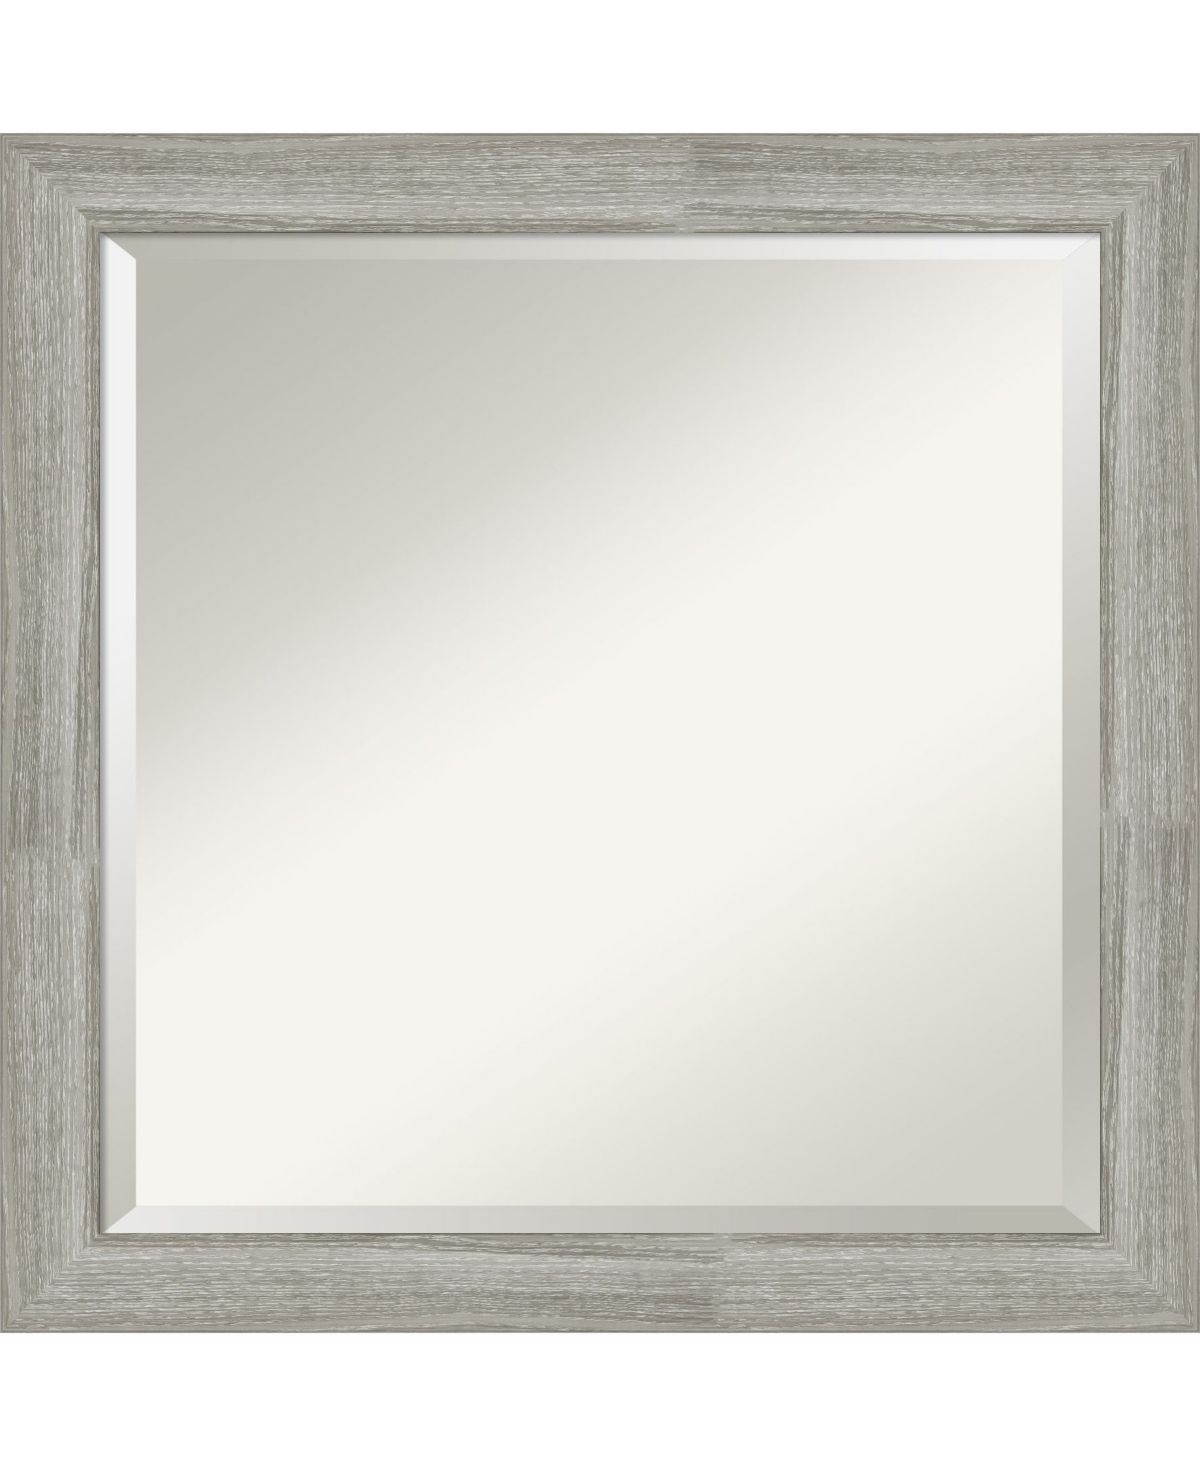 Dove Framed Bathroom Vanity Wall Mirror, 23.5" x 23.50" - Gray